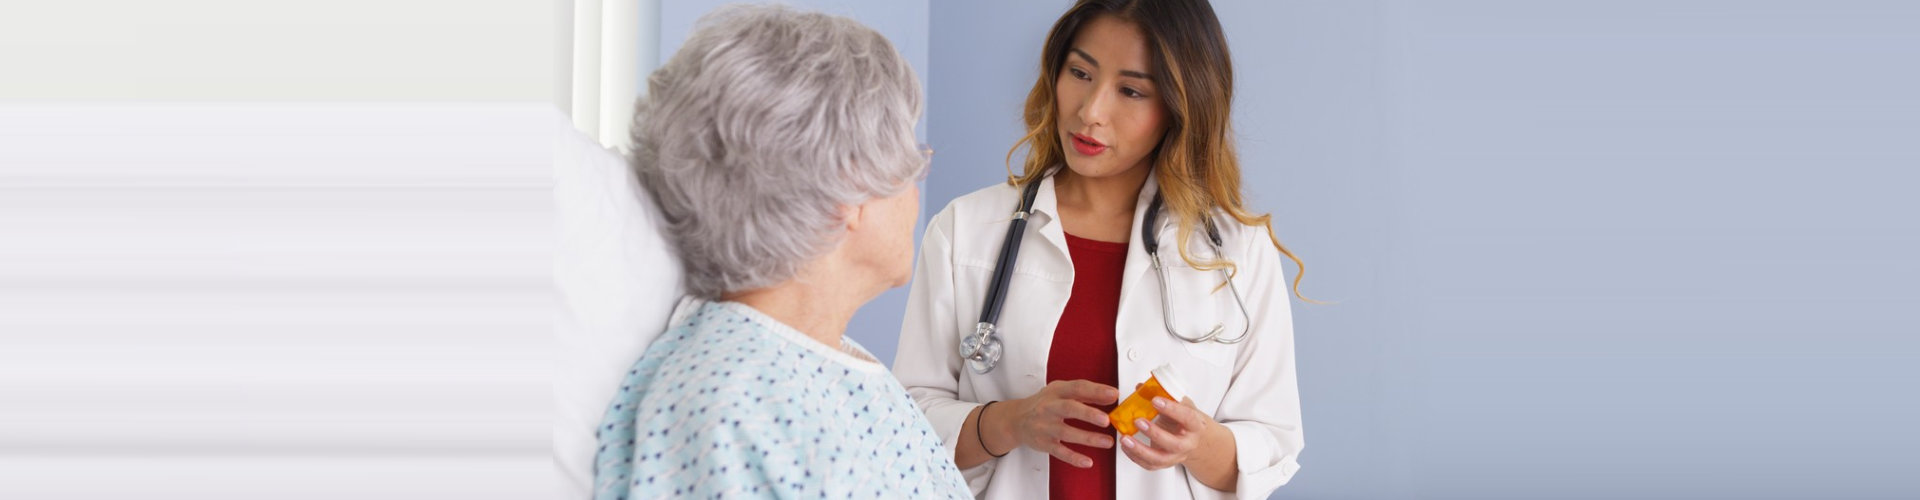 pharmacist showing elder woman medicinal options